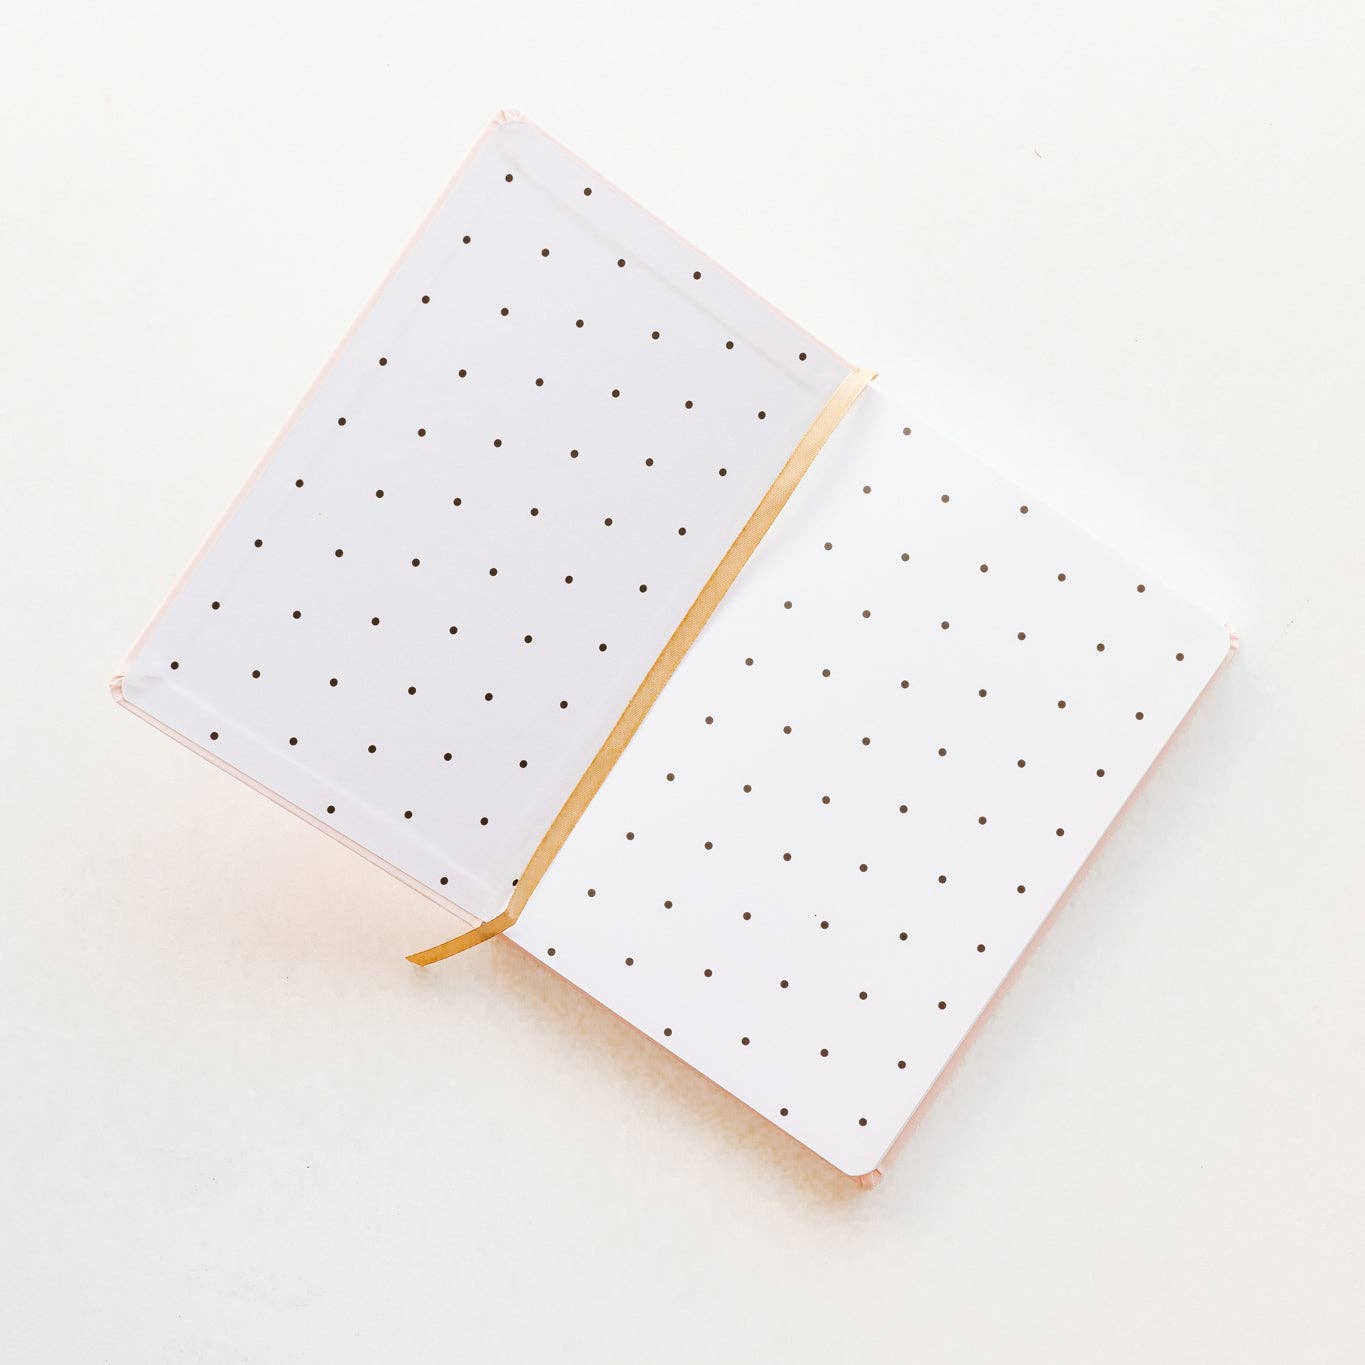 Beautiful Girl Fabric Journal - Home Decor &amp; Gifts